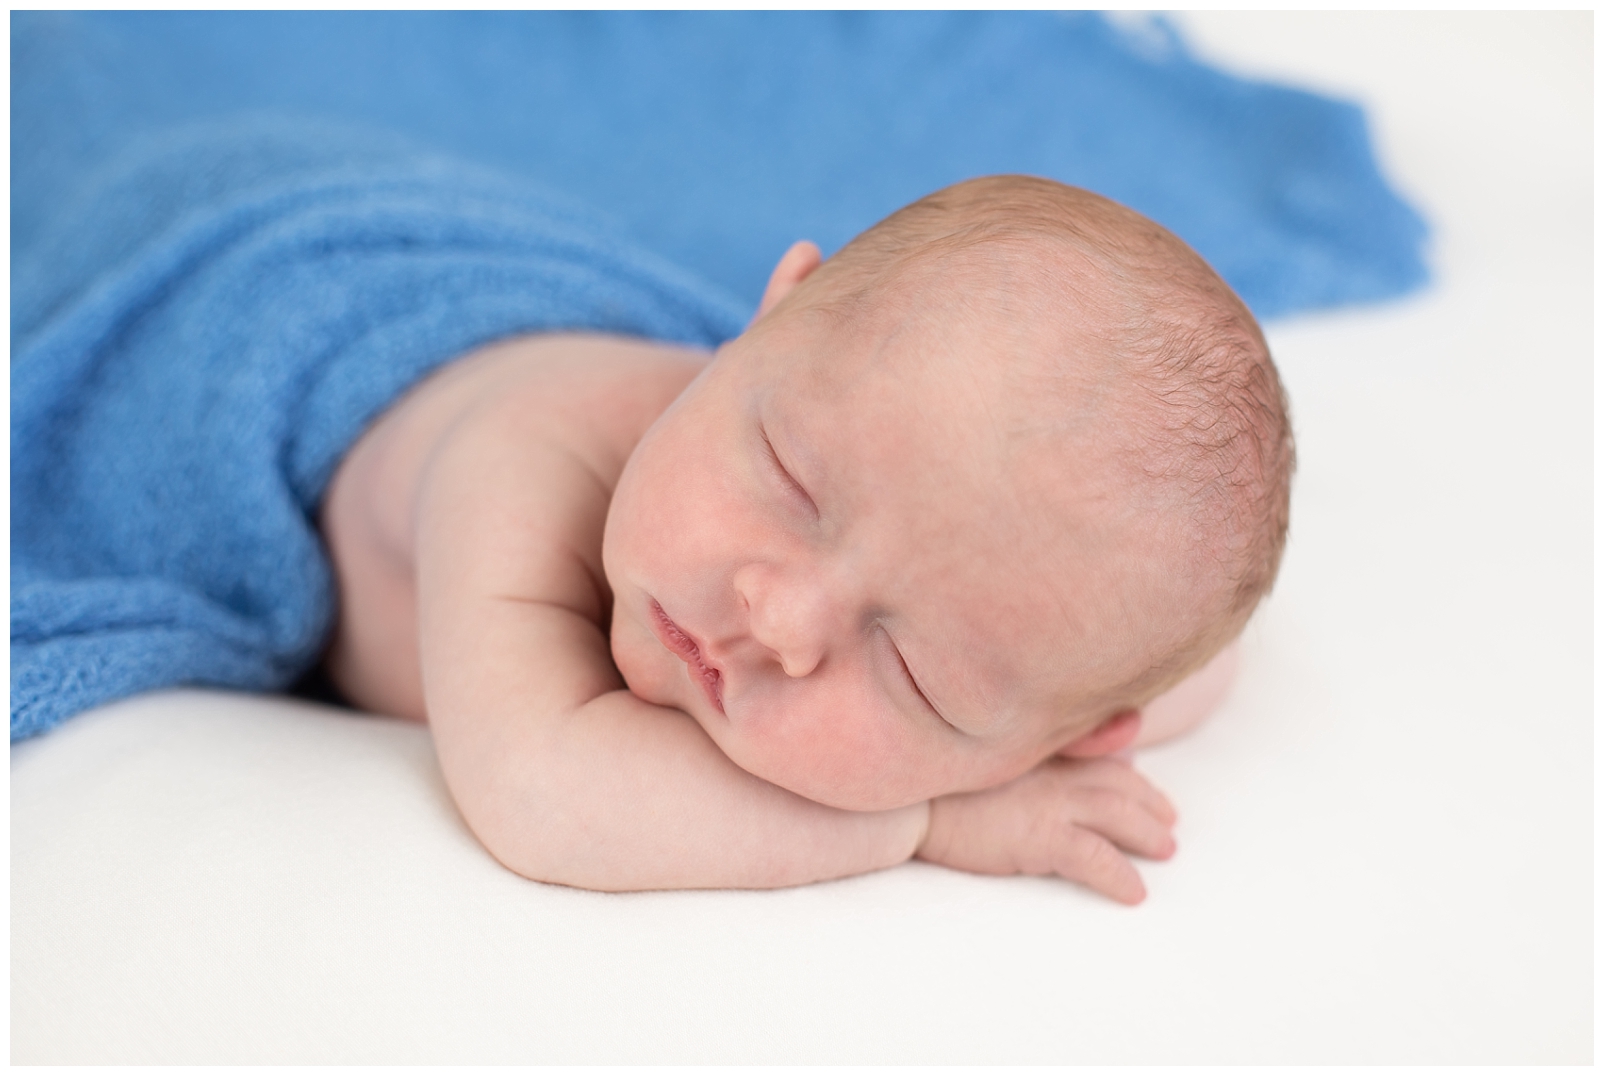 newborn boy chin on hands pose with light blue wrap